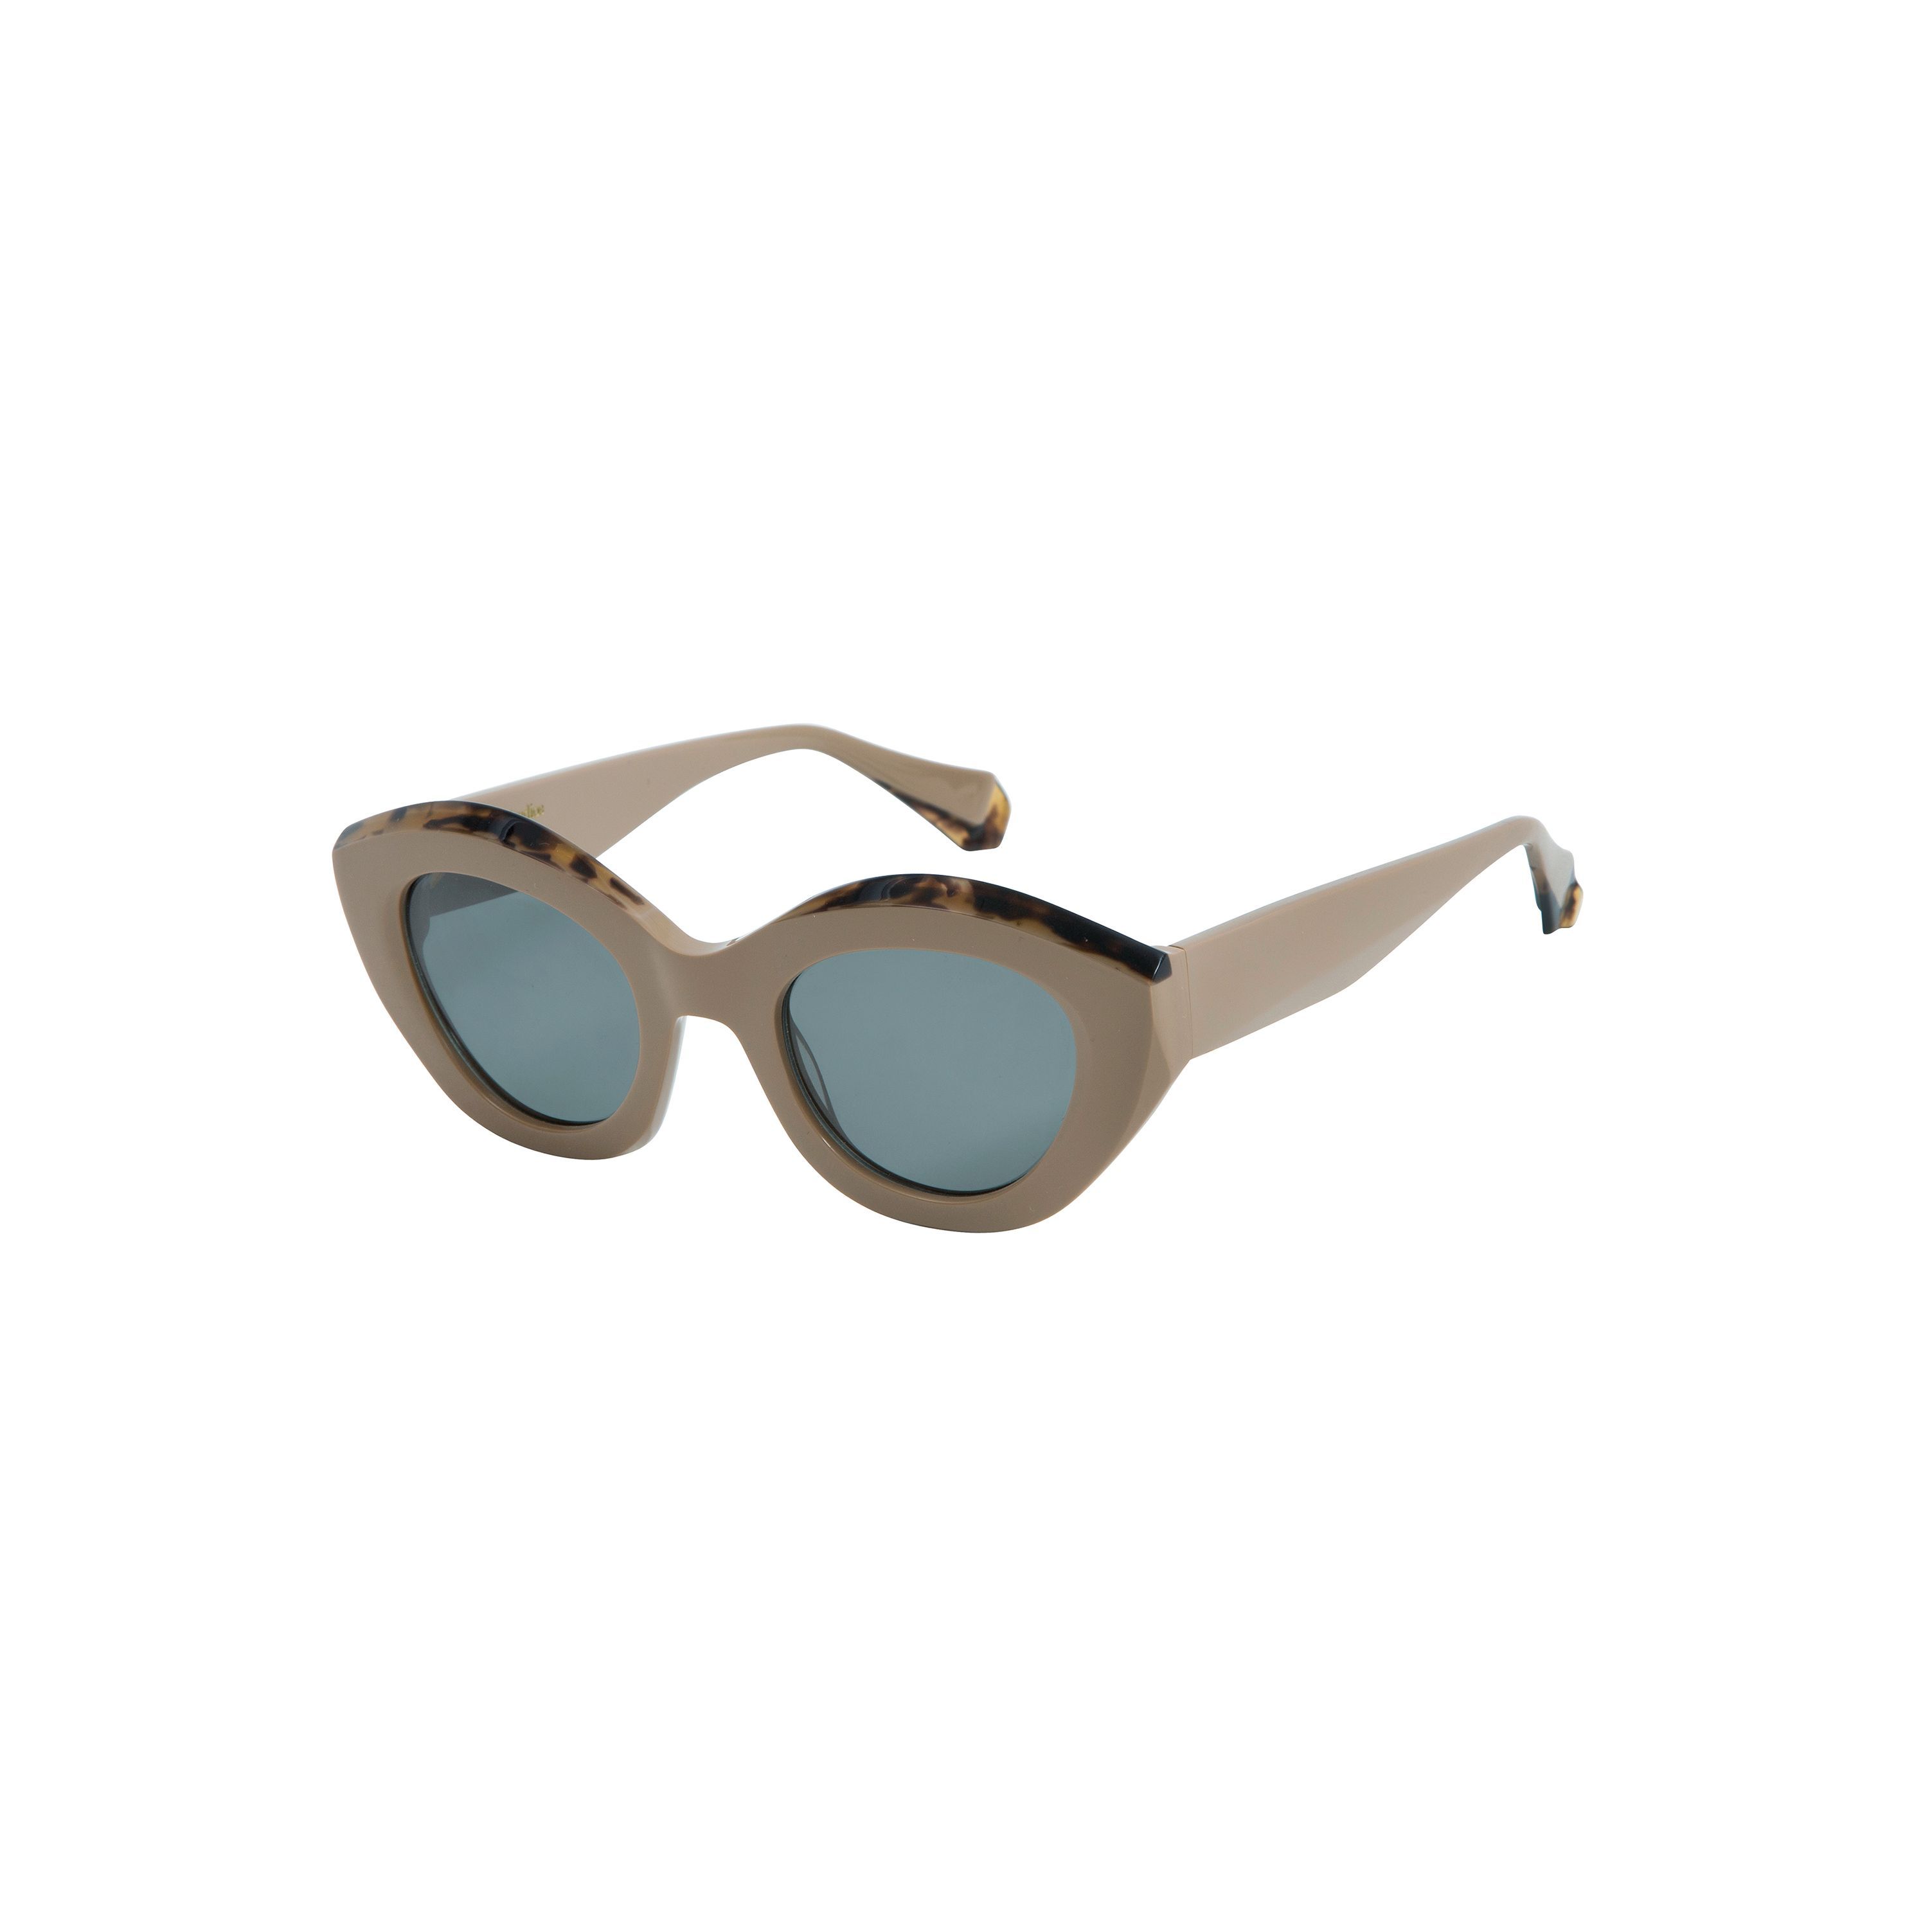 6753 Cat Eye Sunglasses 0 - size 47